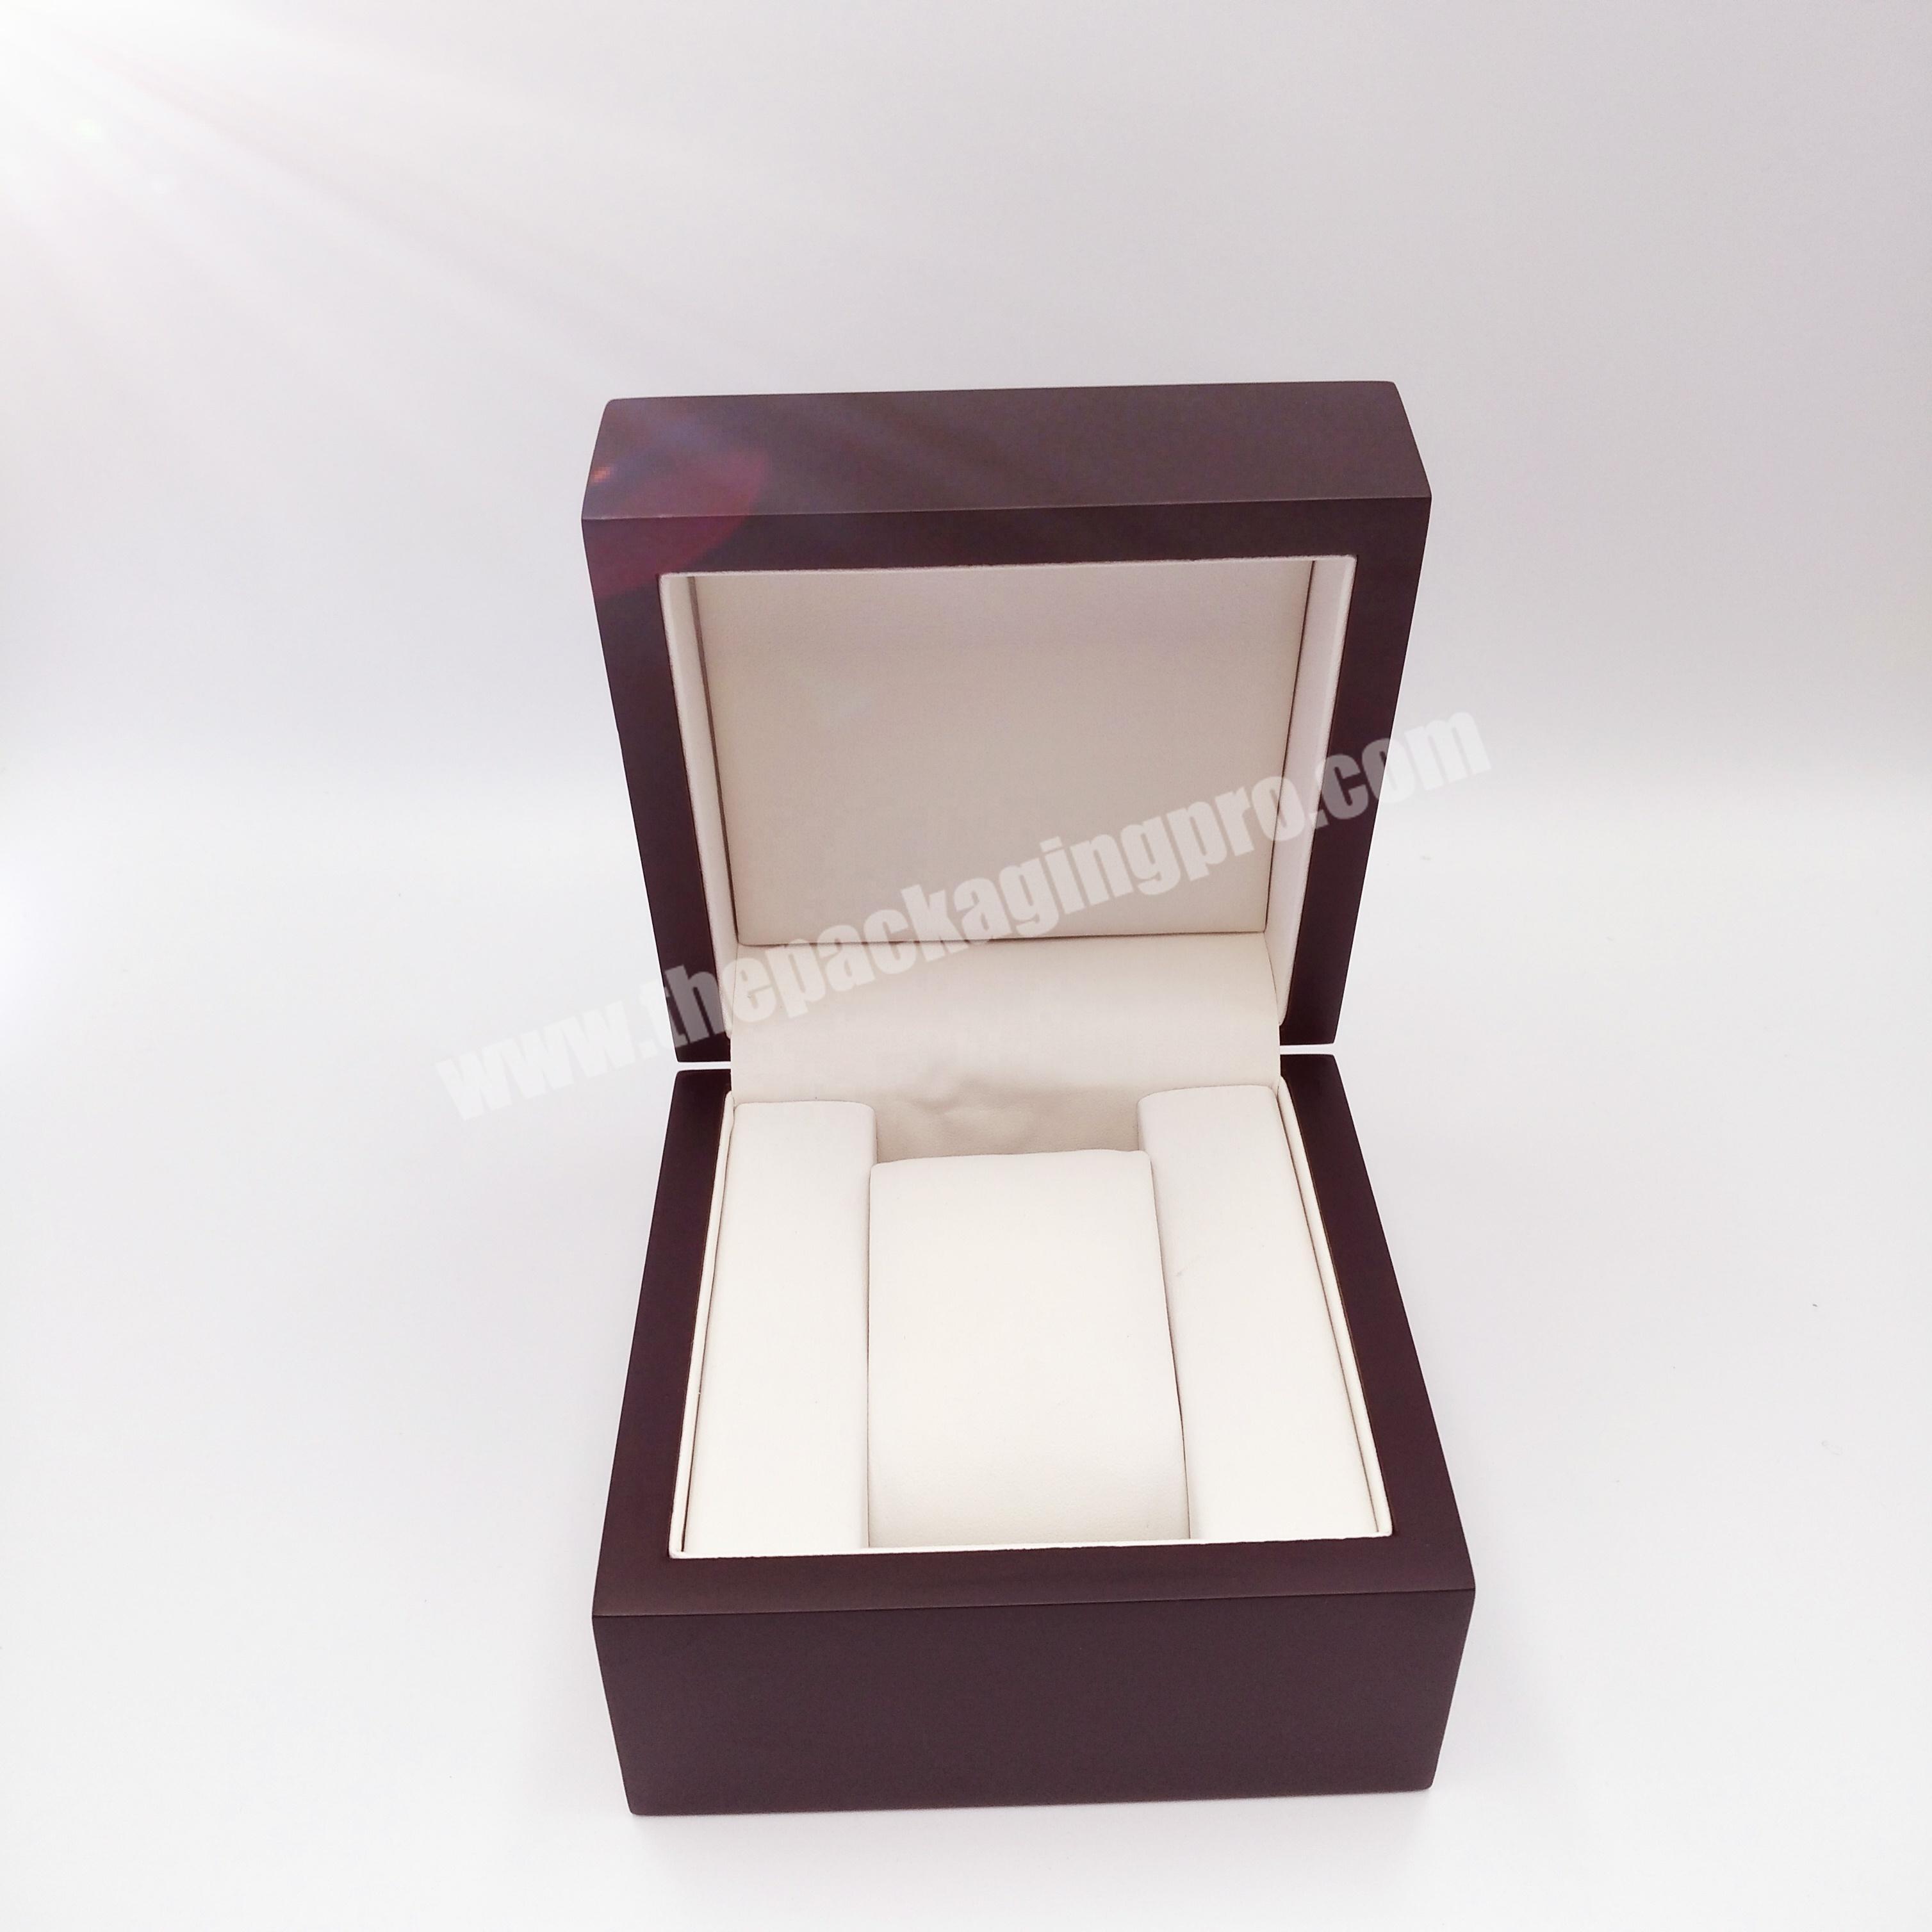 Designer customized luxury jewelry customize watch box